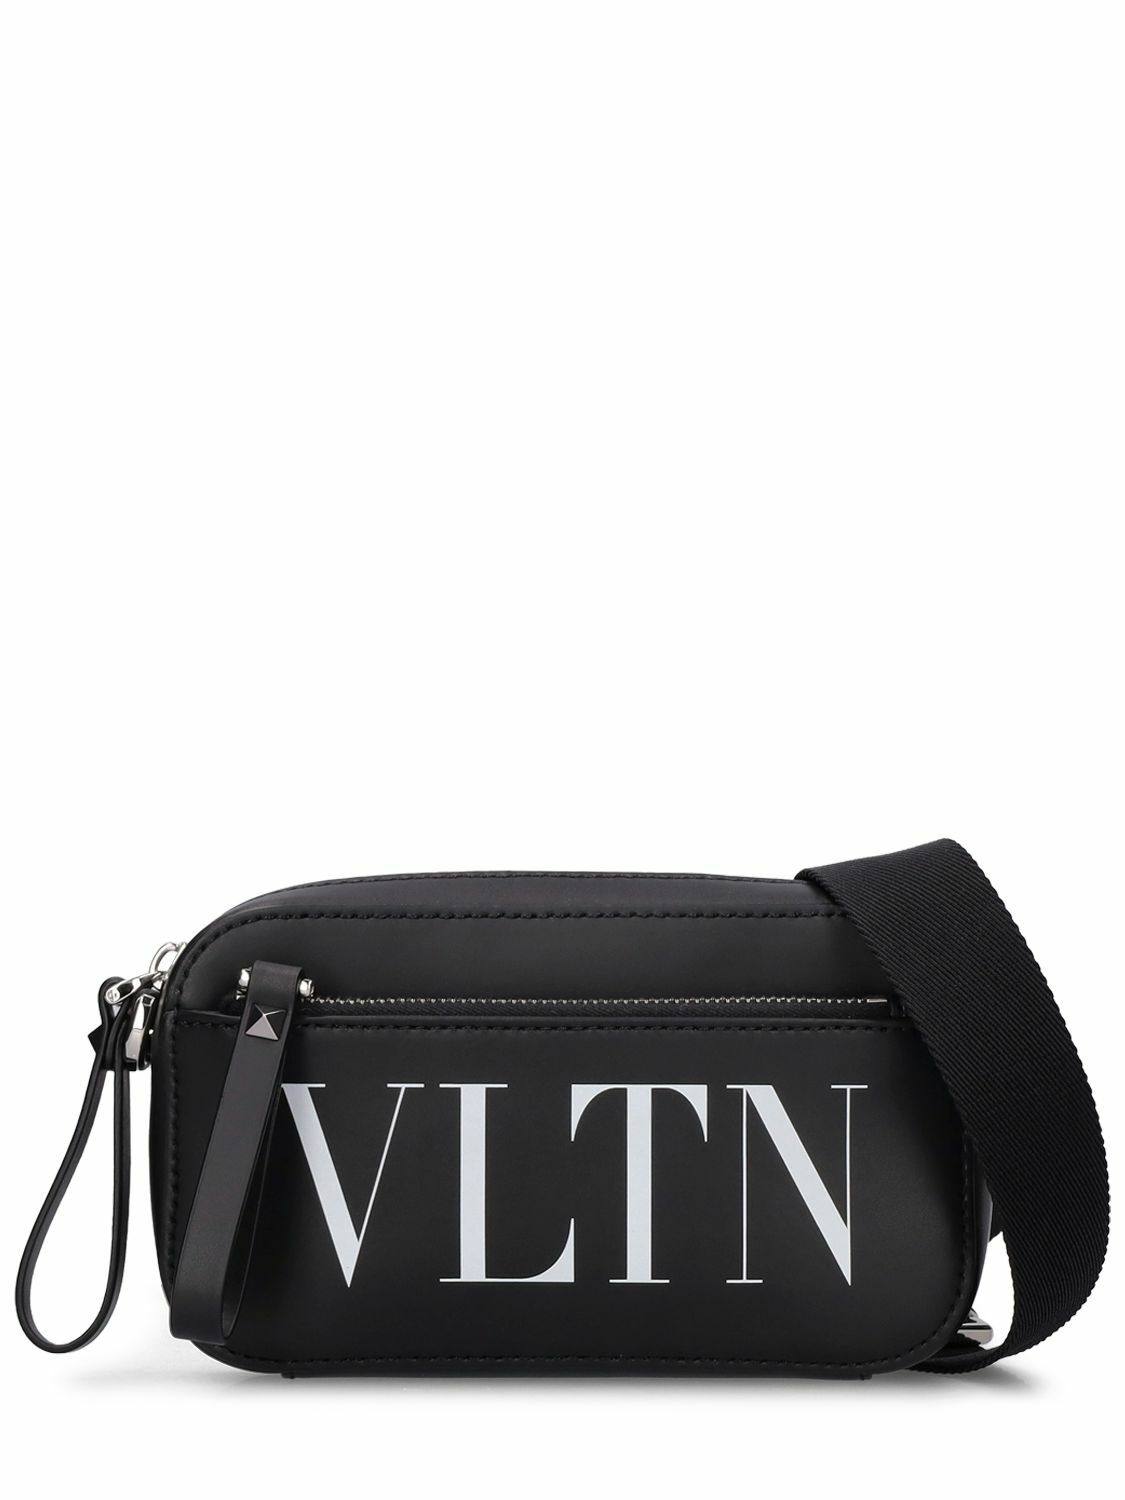 Photo: VALENTINO GARAVANI Vltn Leather Small Crossbody Bag